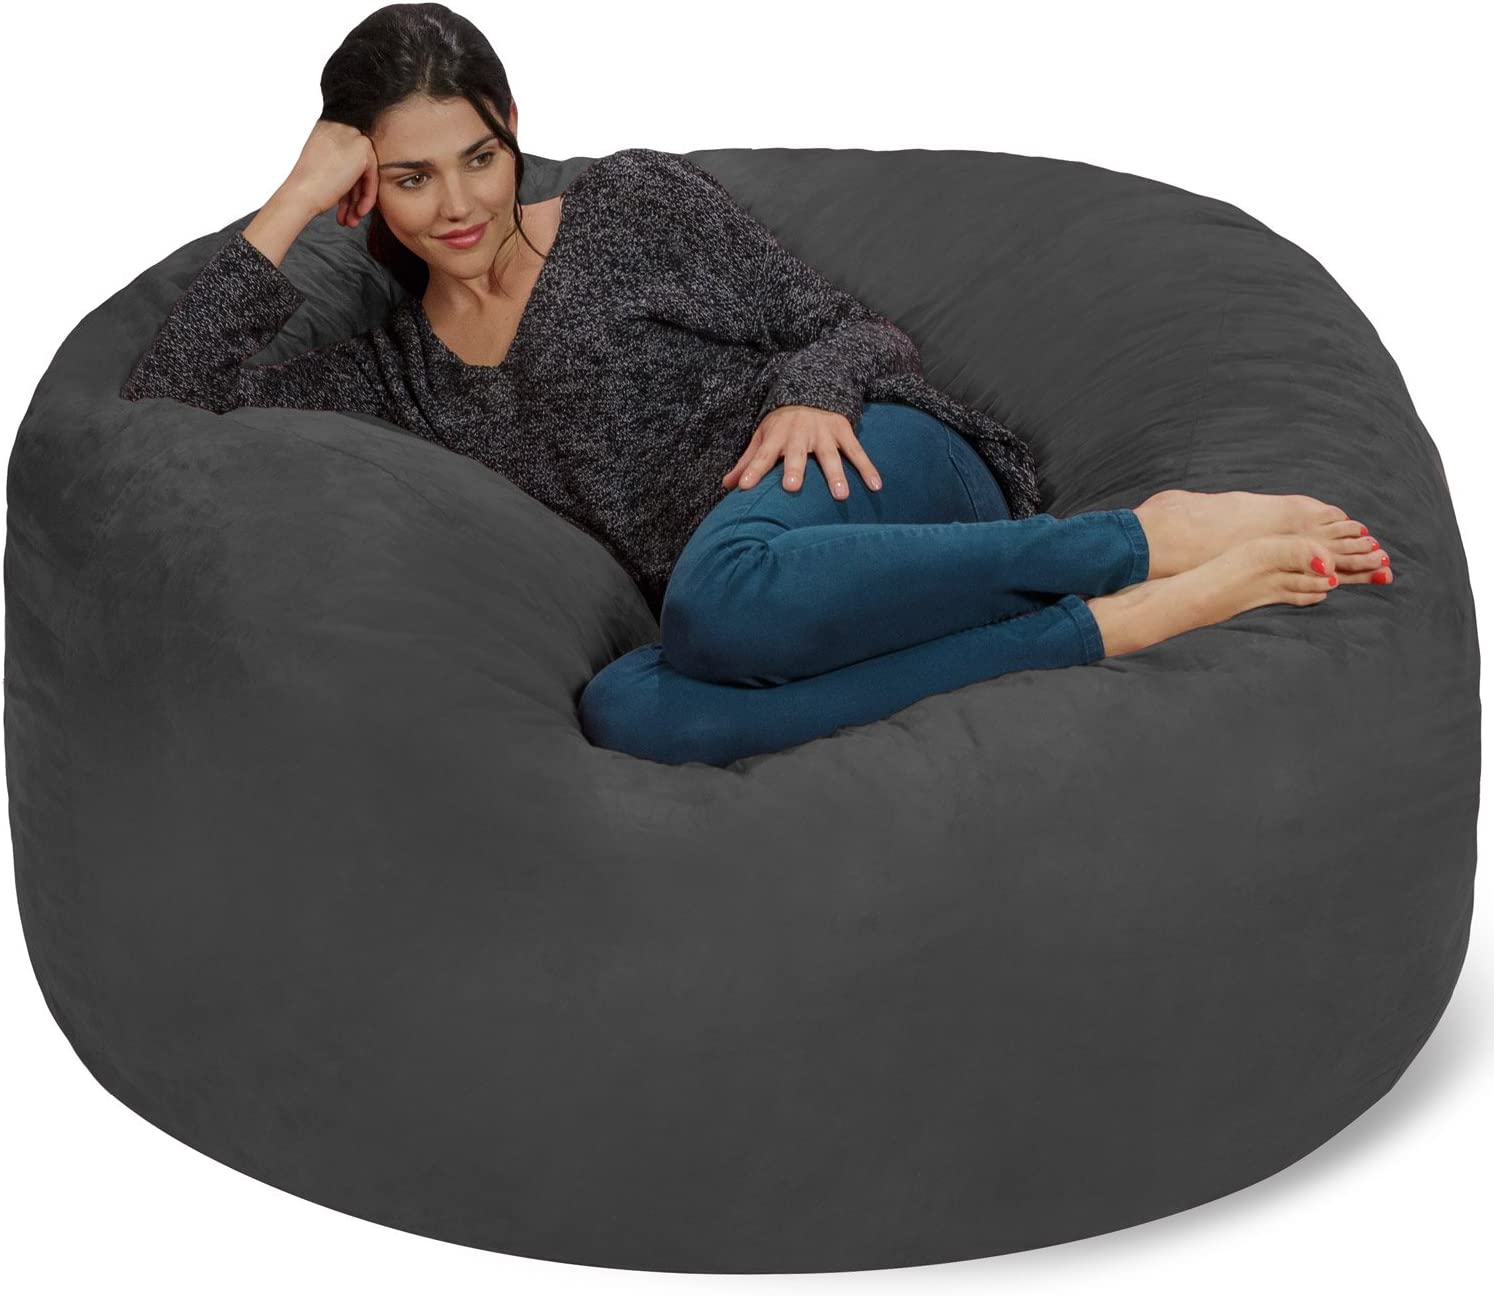 Chill Sack Bean Bag Chair: Giant 5' Memory Foam [...]